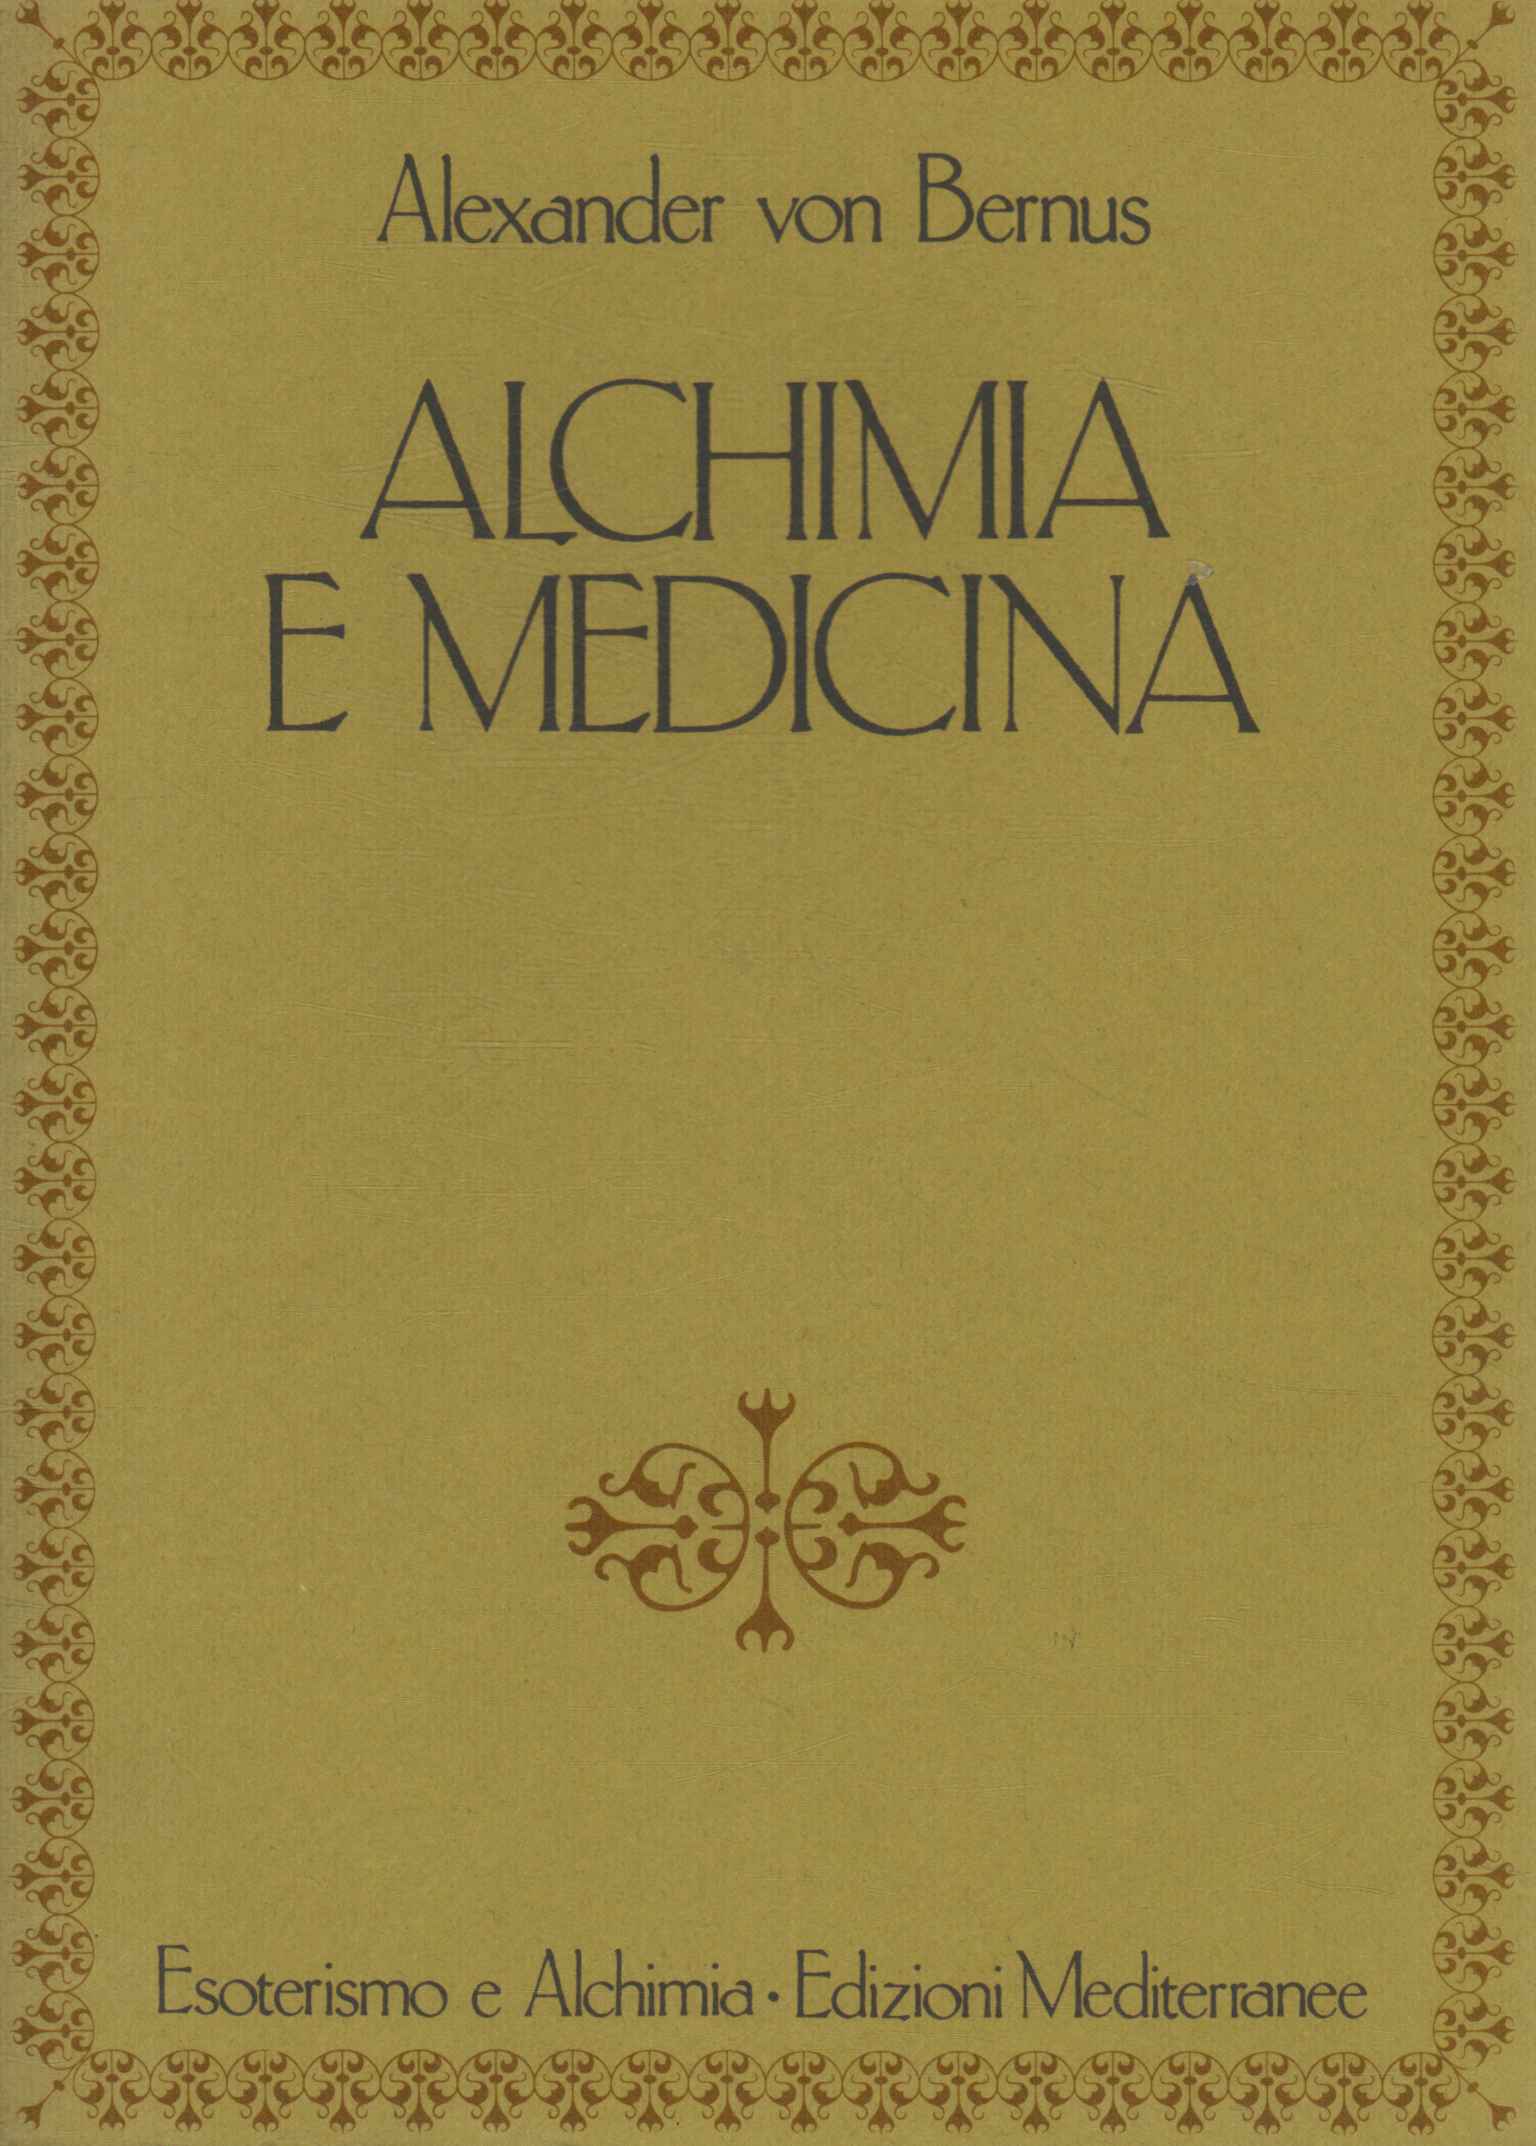 Alchimia e Medicina